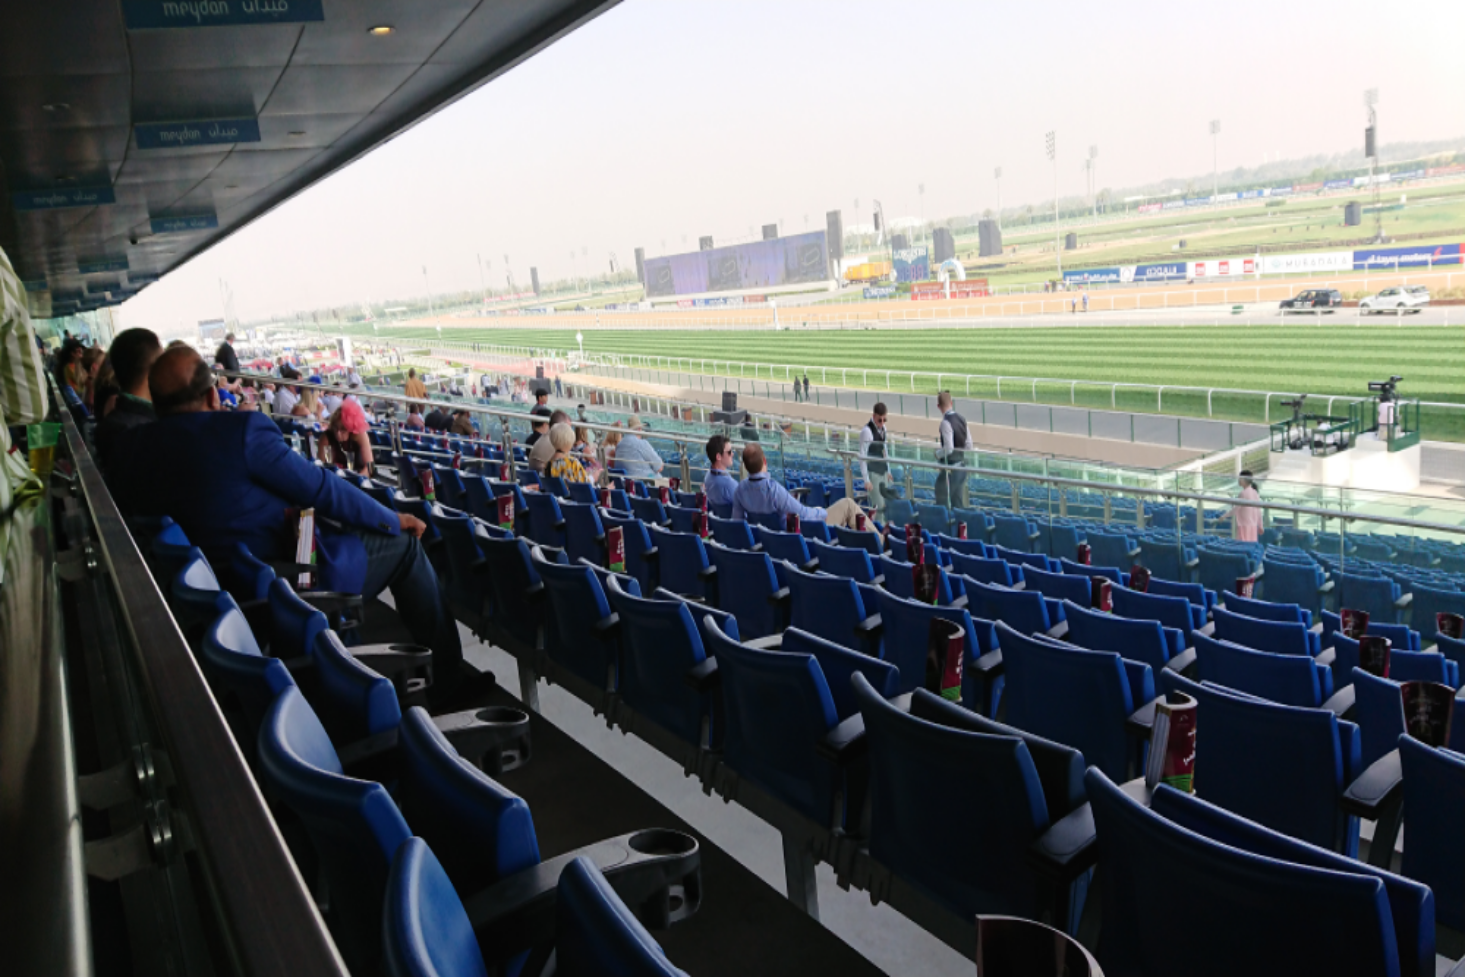 The Architectural Marvel of Dubai International Cricket Stadium